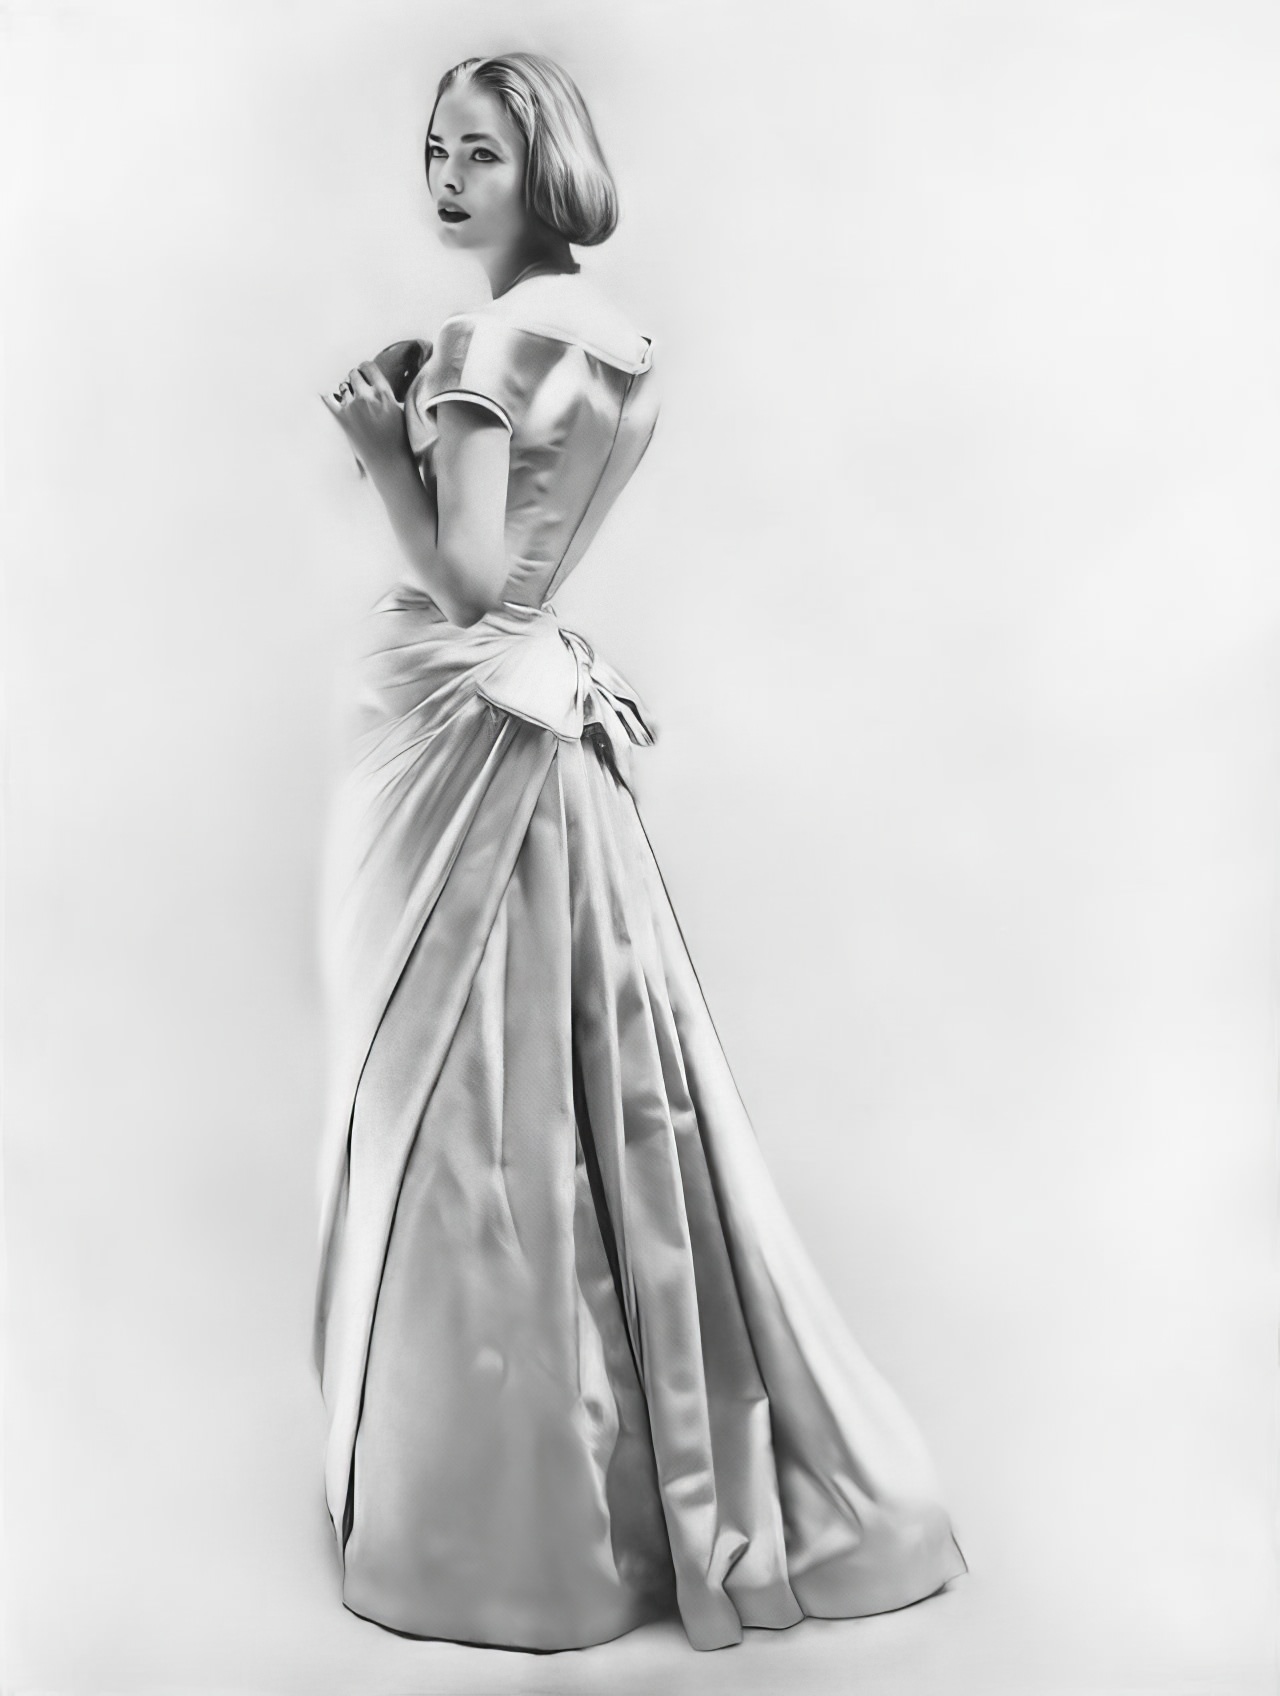 Susan Abraham in an evening dress of eglantine satin, 1956.